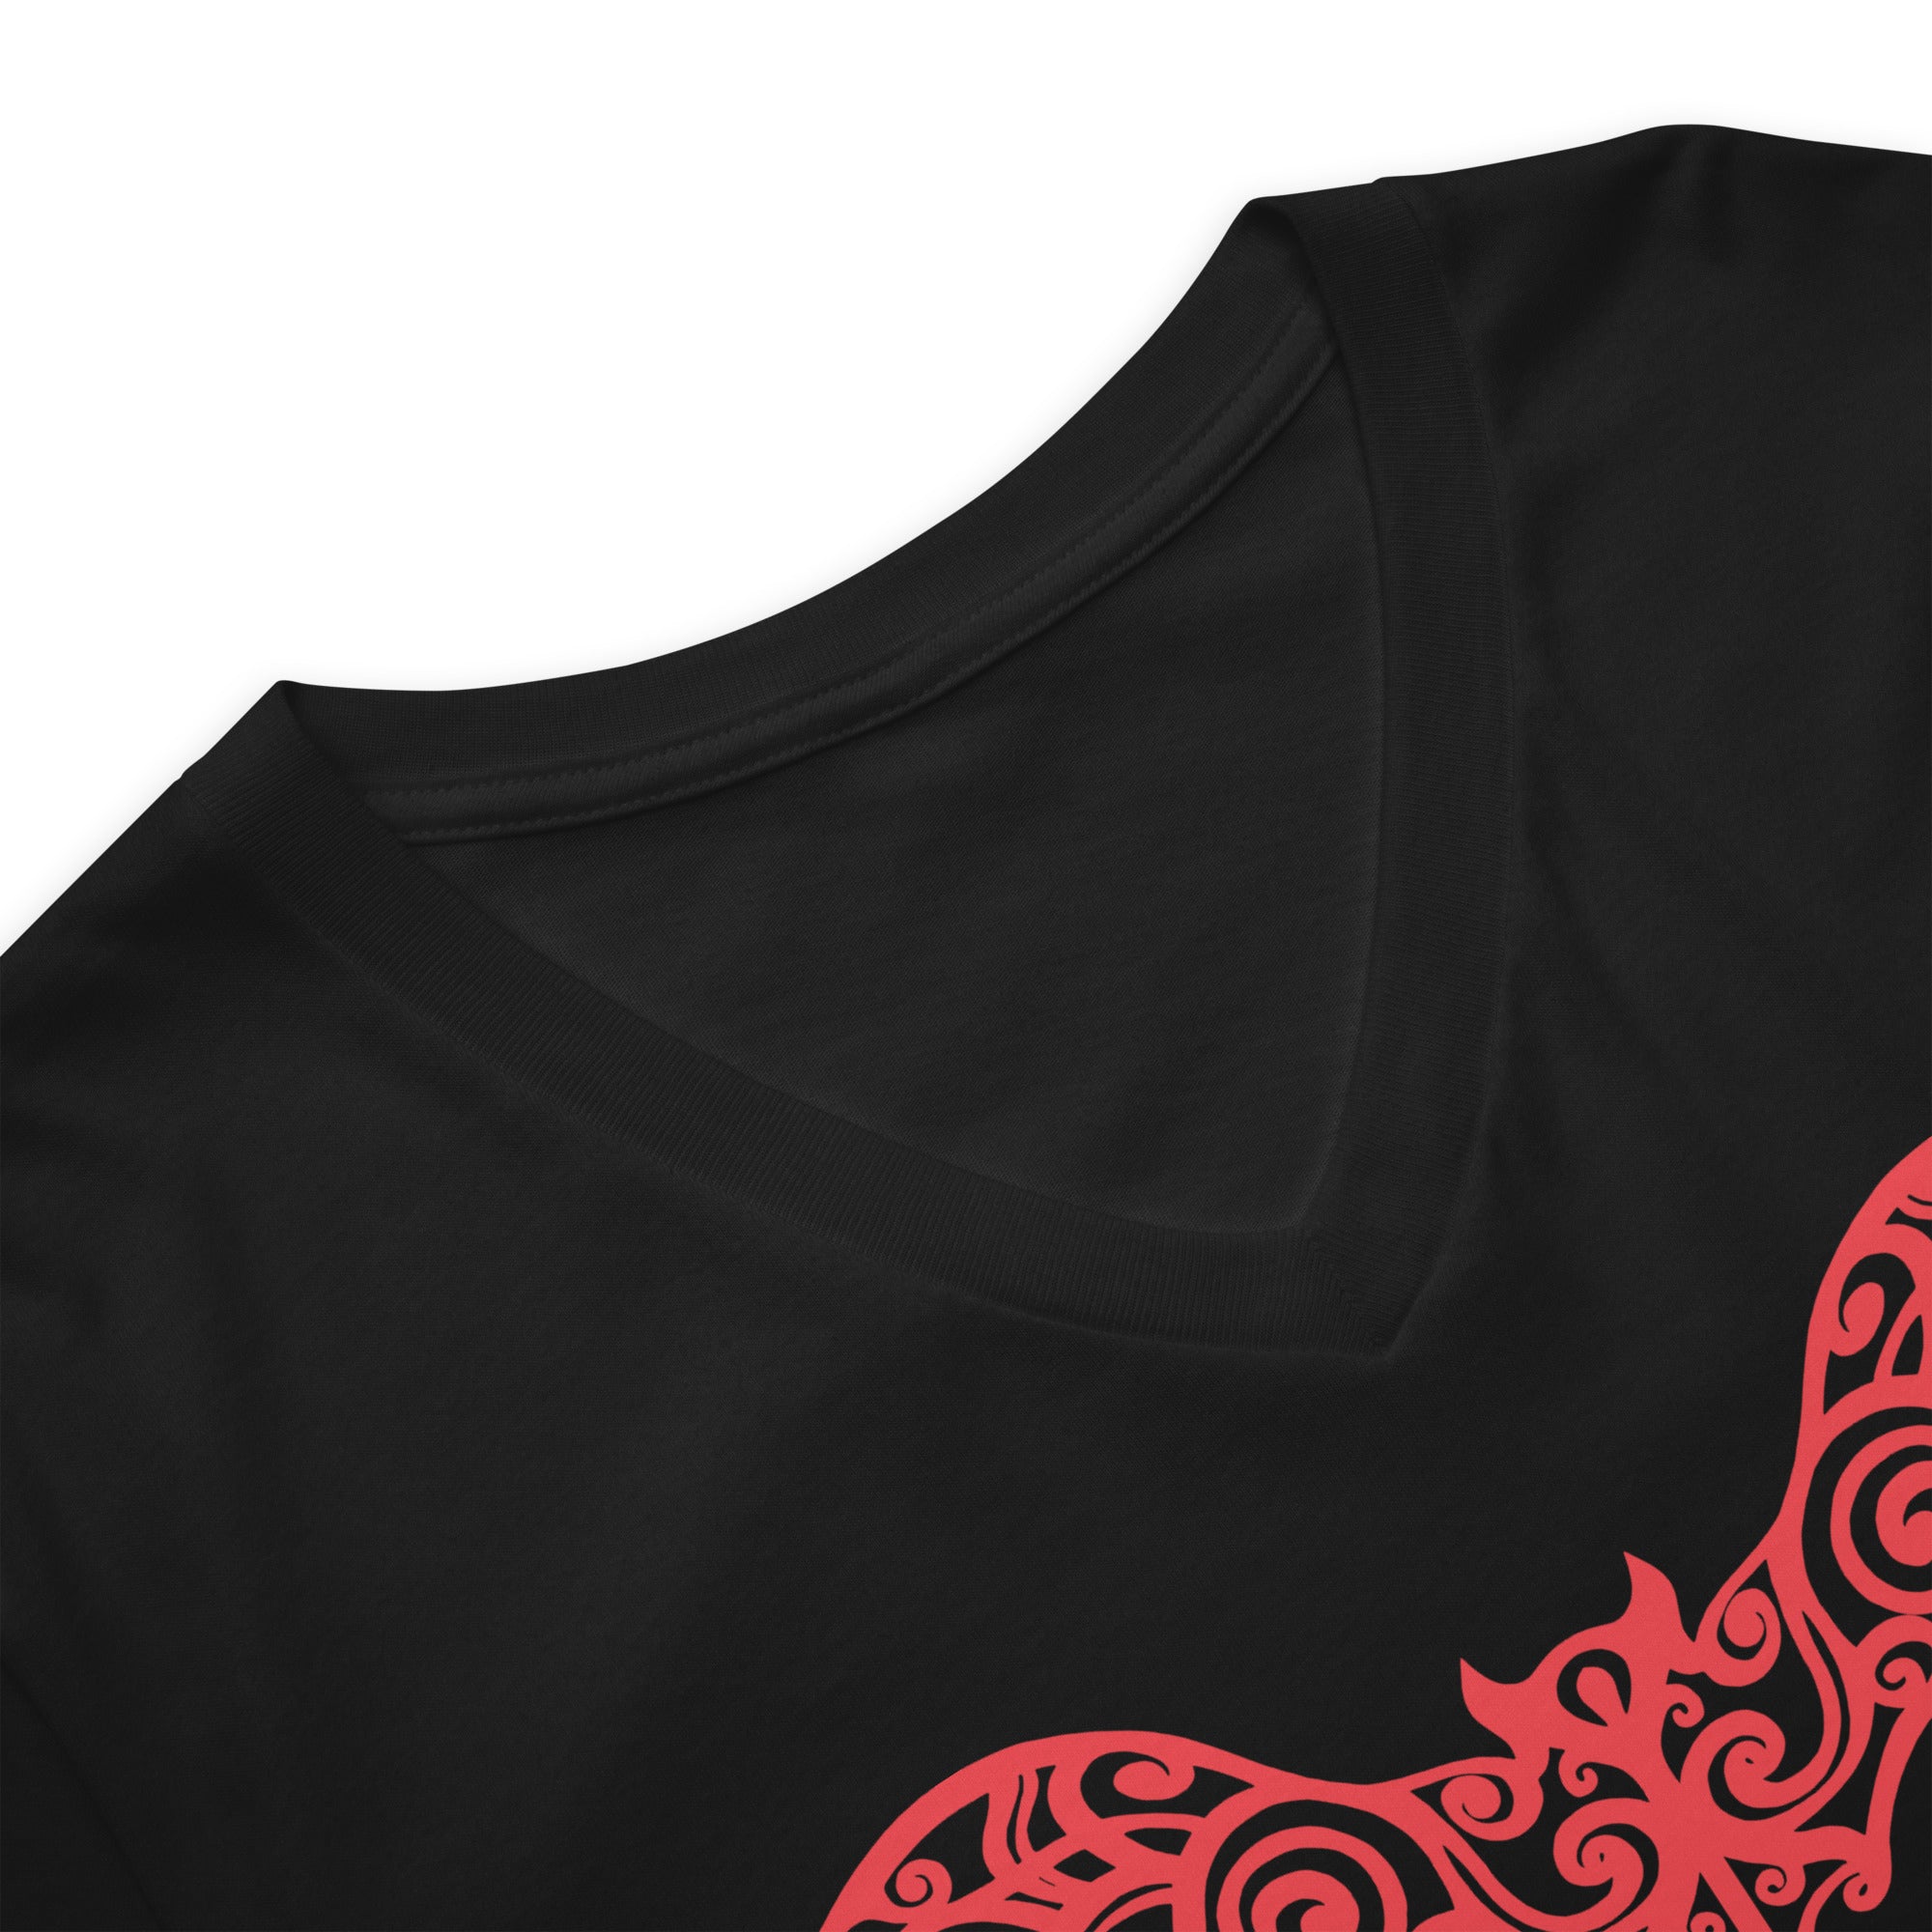 Gothic Wrought Iron Style Vine Bat Women’s Short Sleeve V-Neck T-Shirt Red Print - Edge of Life Designs